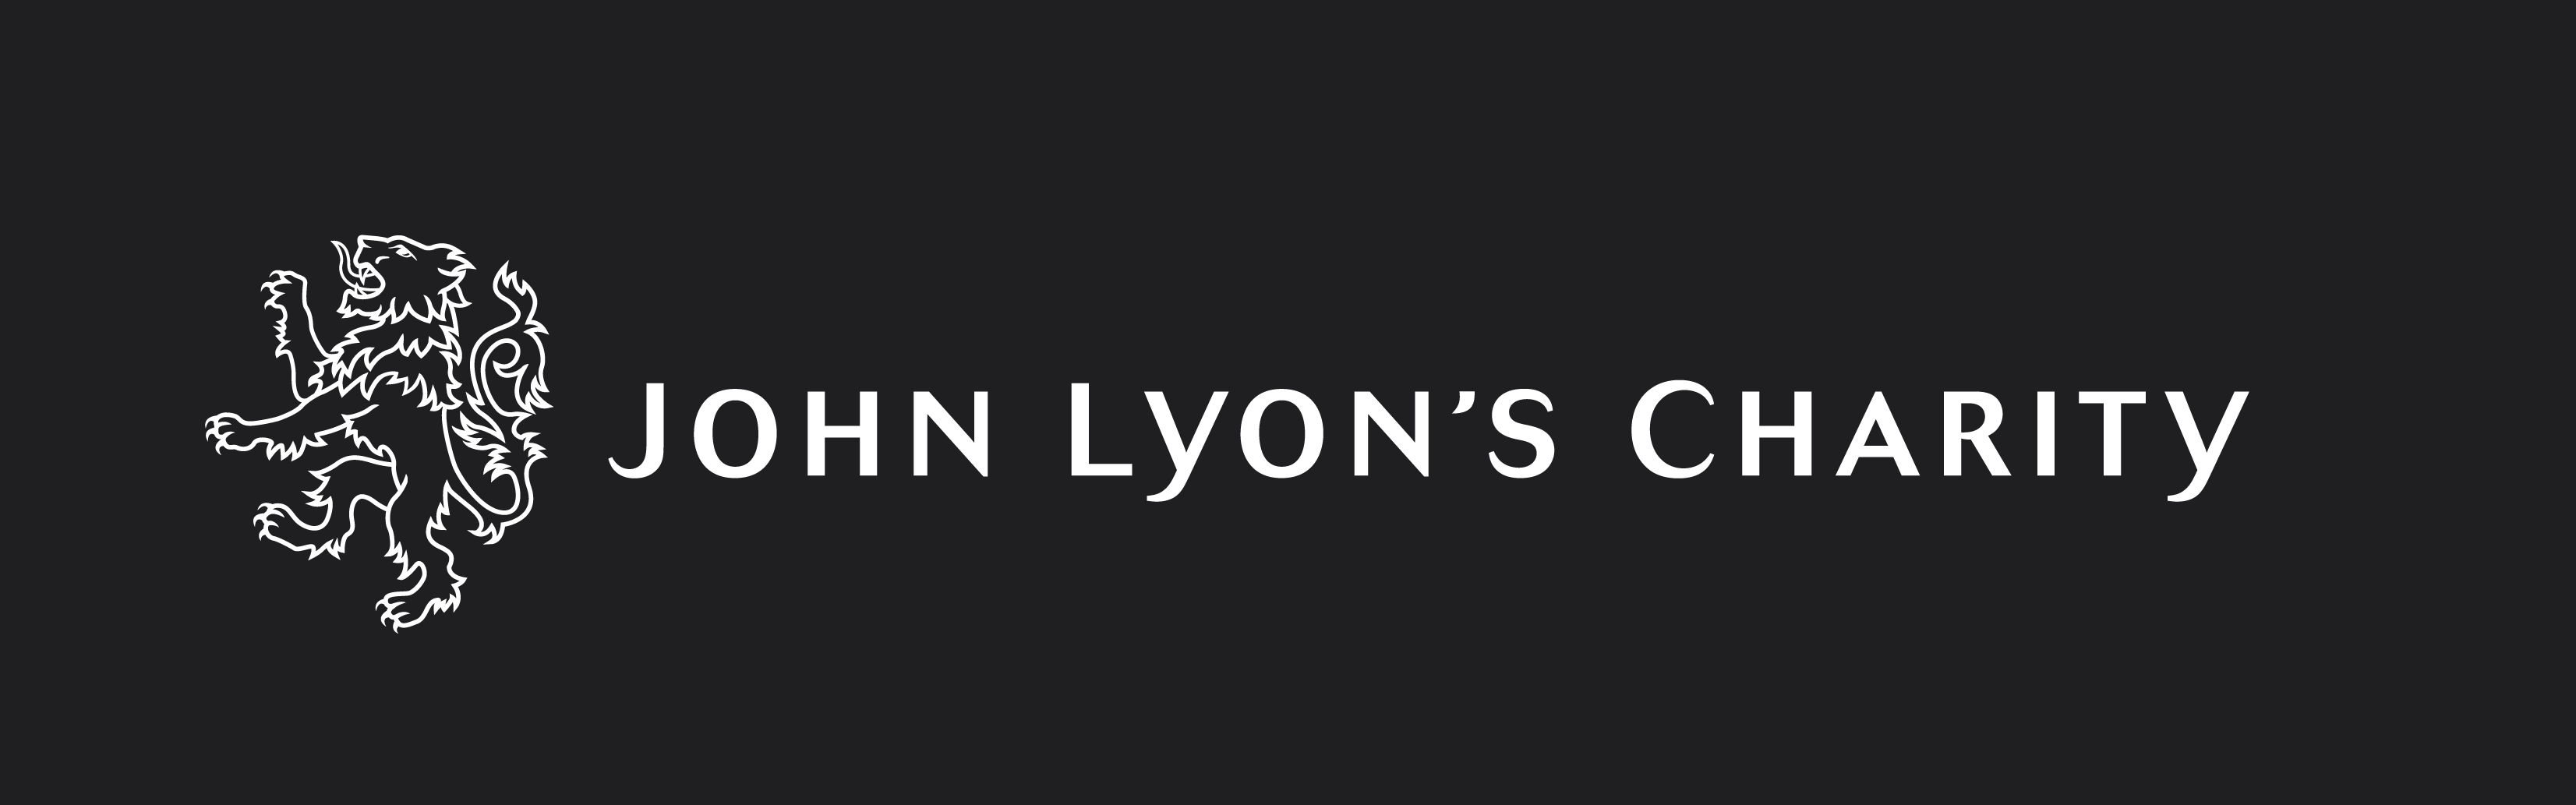 John Lyons Charity black 2